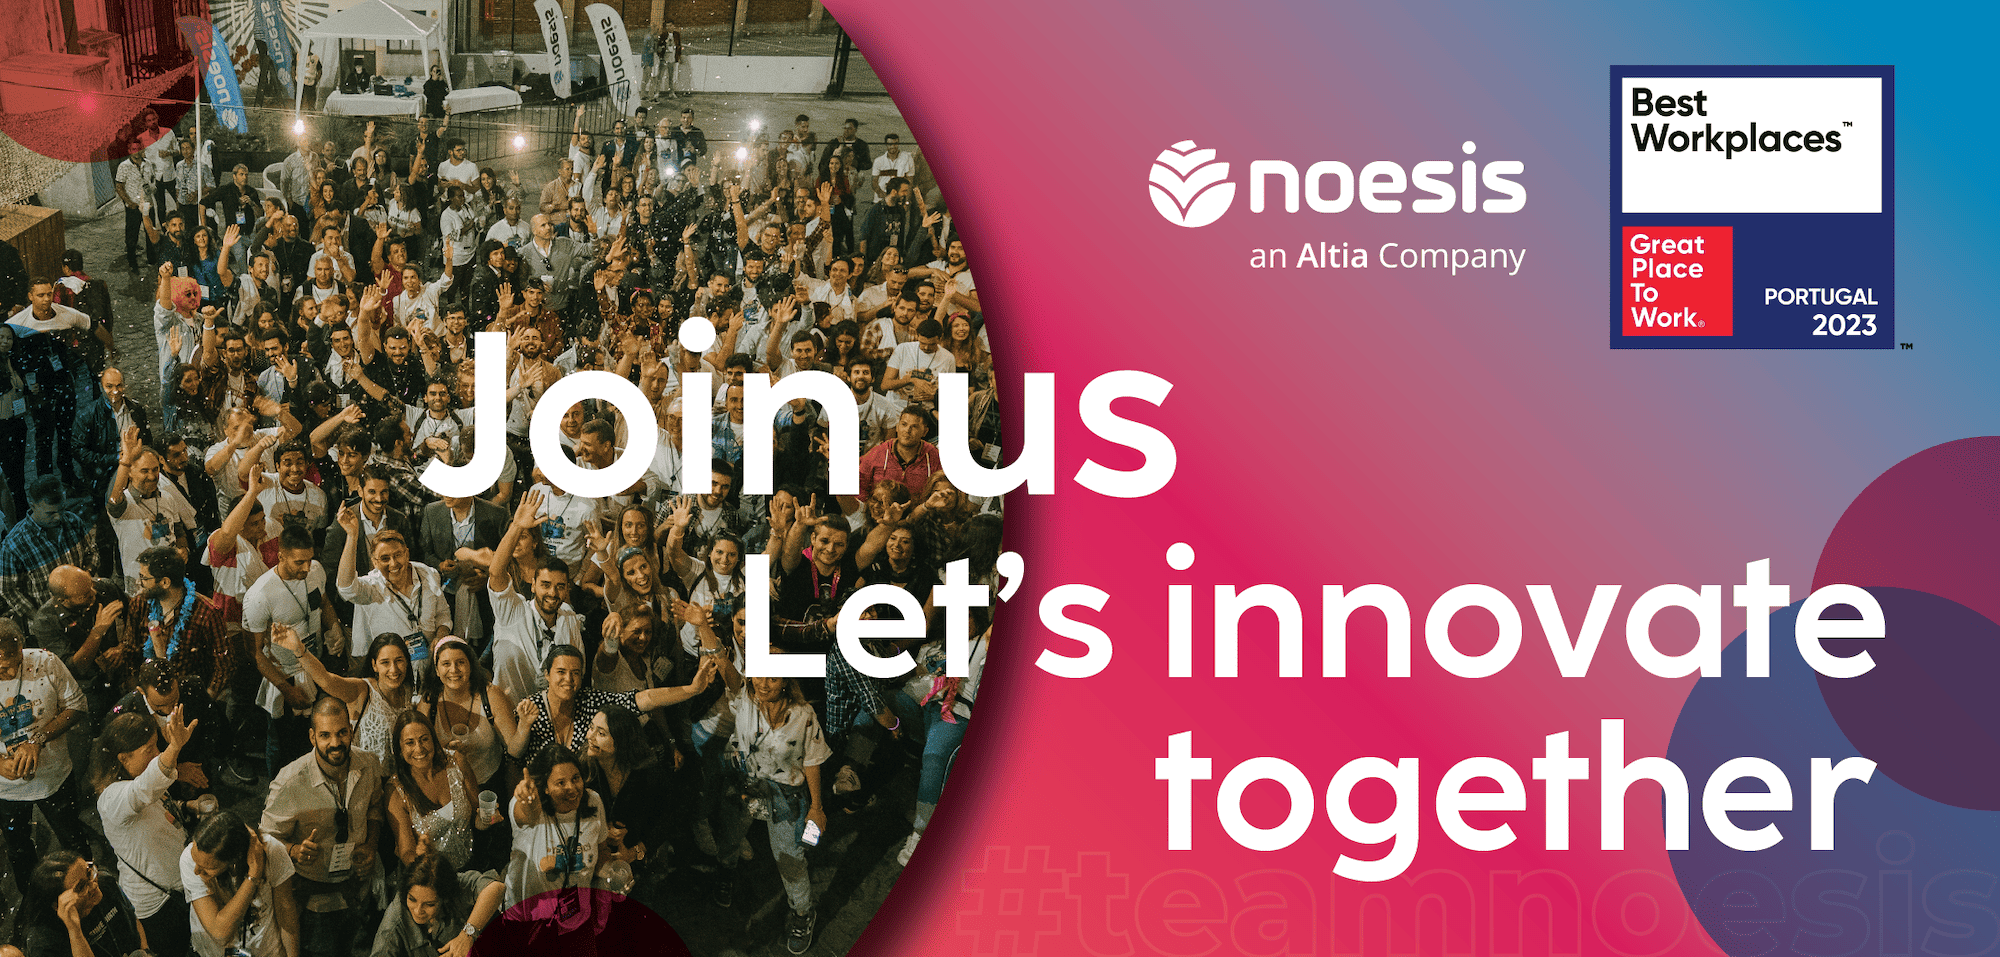 Noesis - Vamos inovar juntos!